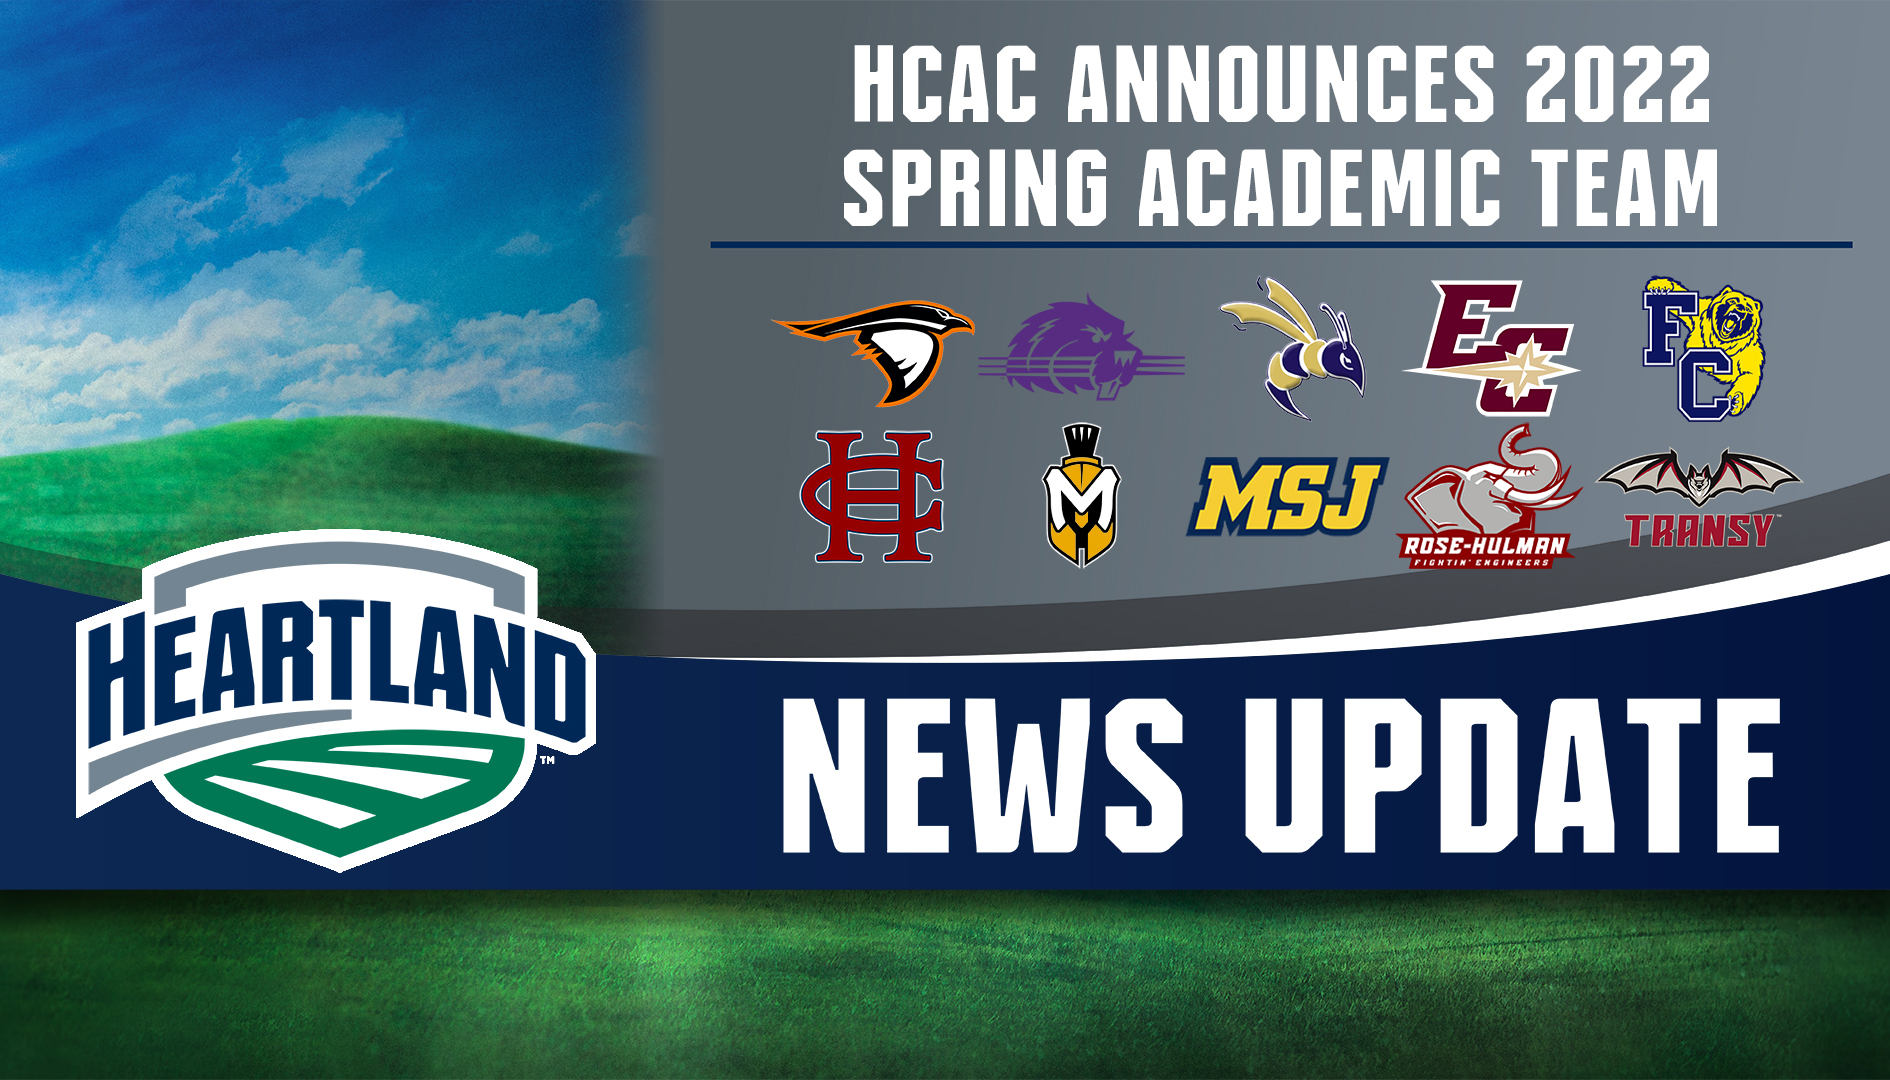 Anderson Records 39 Academic All-HCAC Recipients for Spring 2022 Season